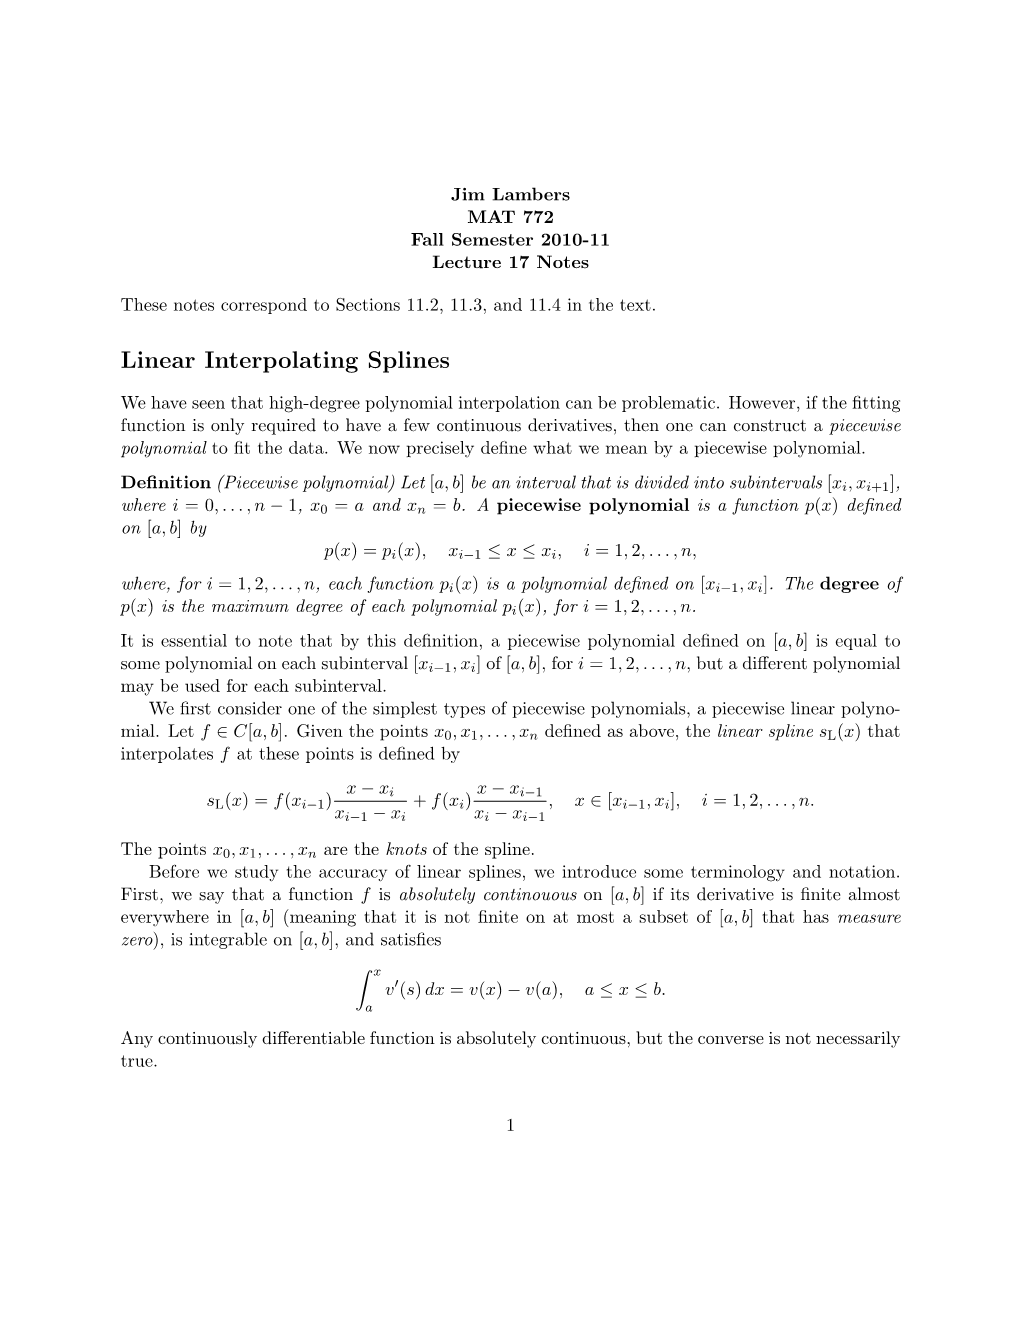 Linear Interpolating Splines